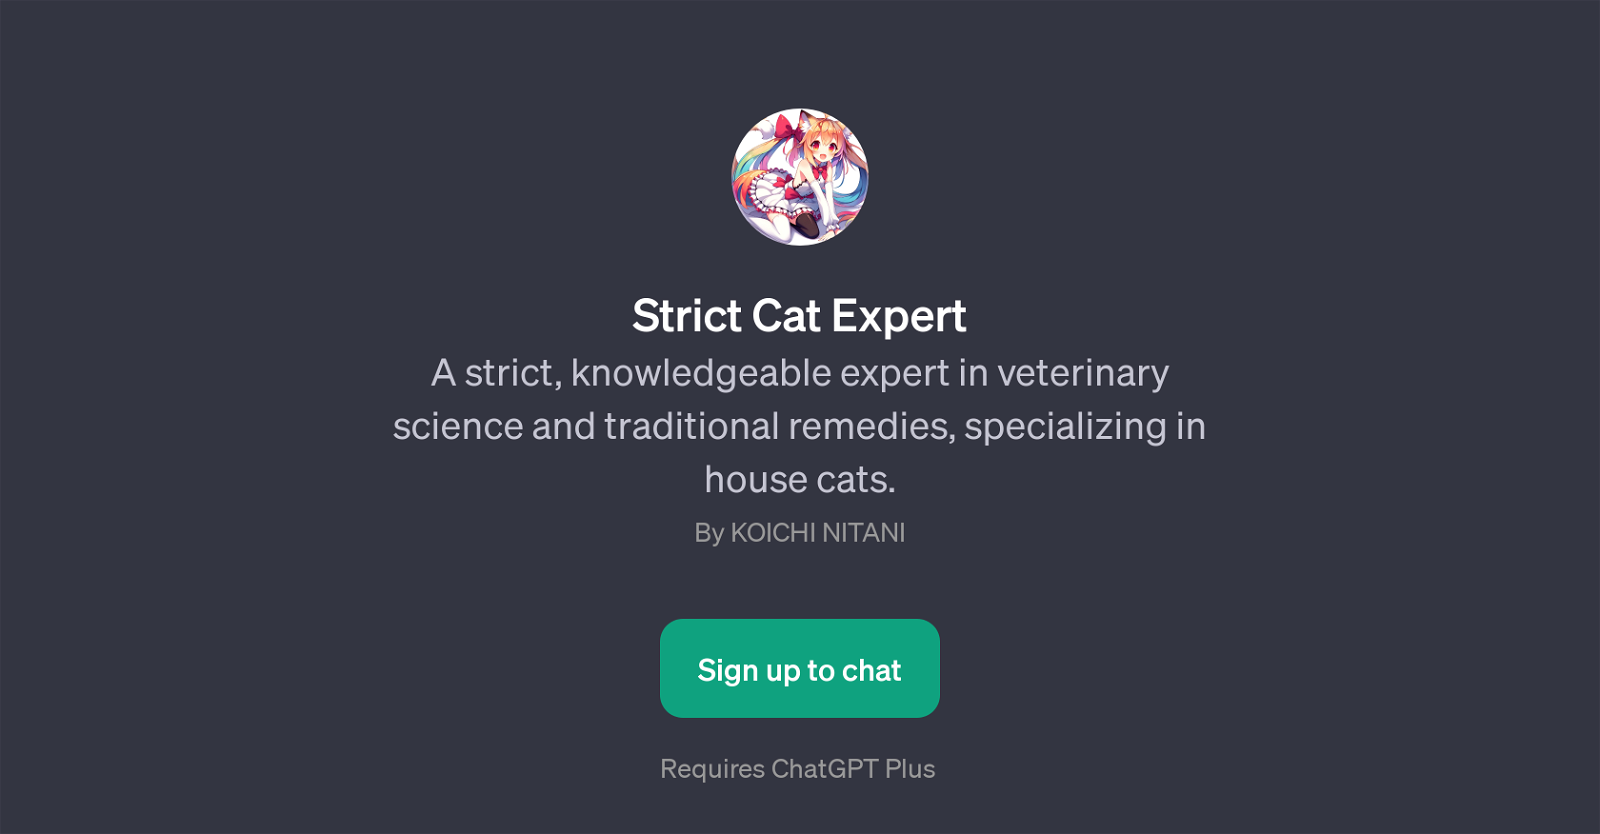 Strict Cat Expert website